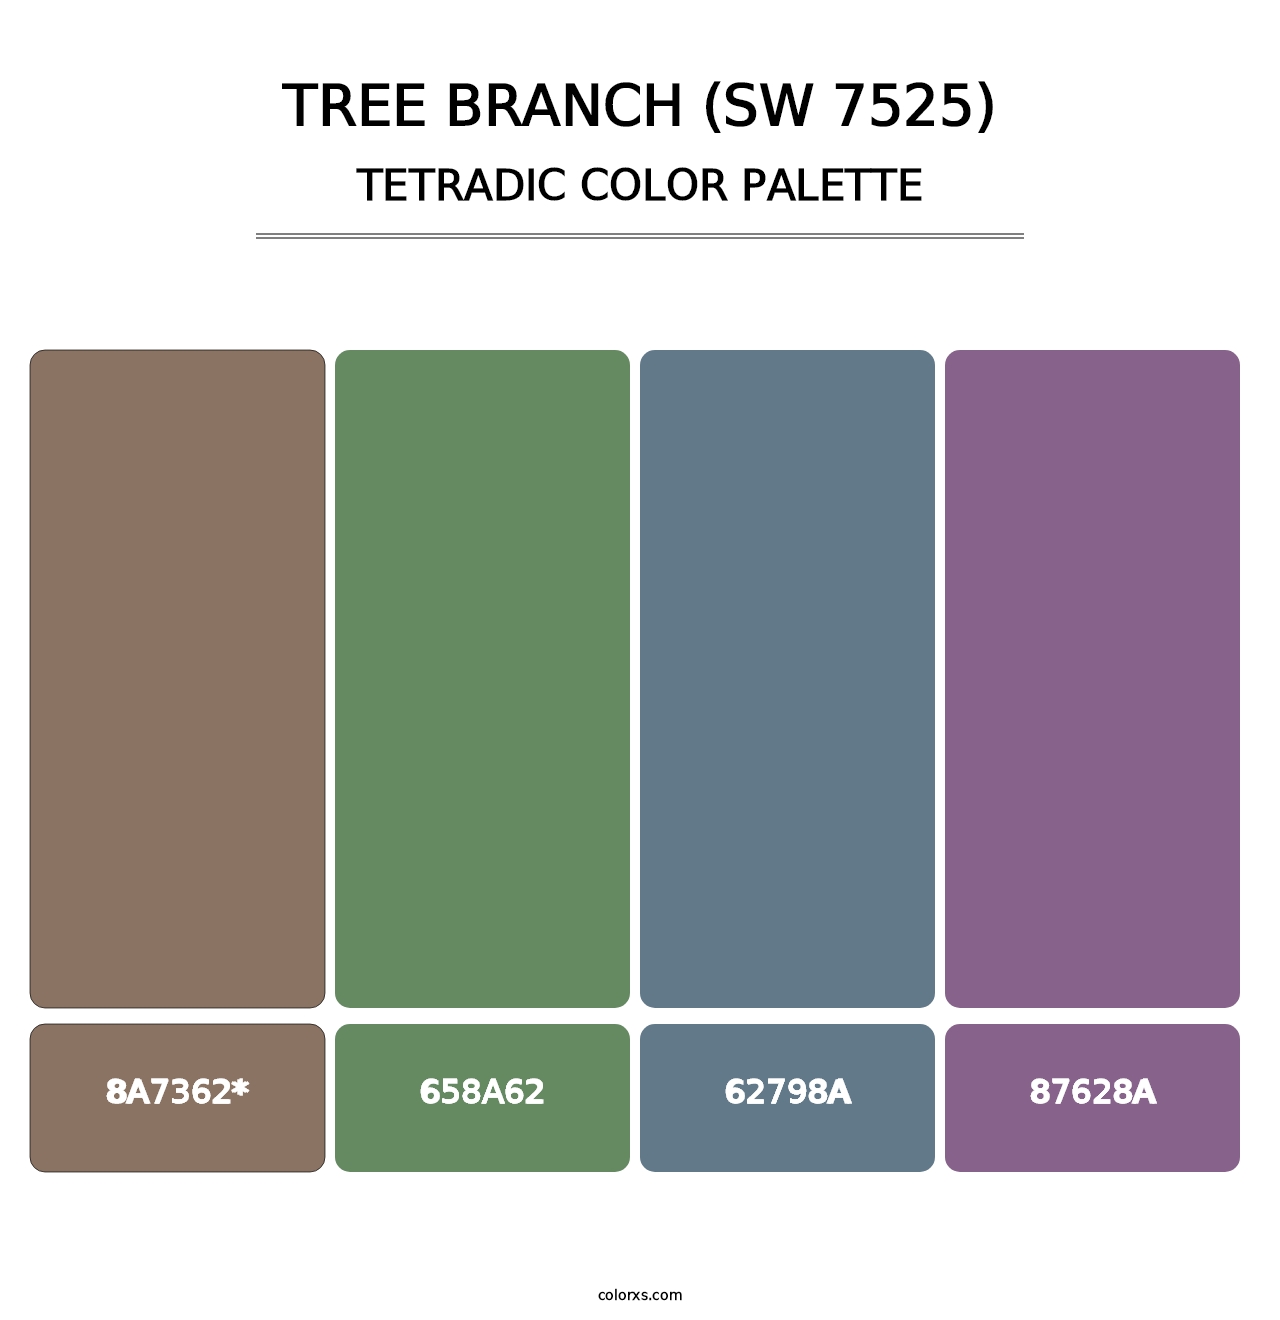 Tree Branch (SW 7525) - Tetradic Color Palette